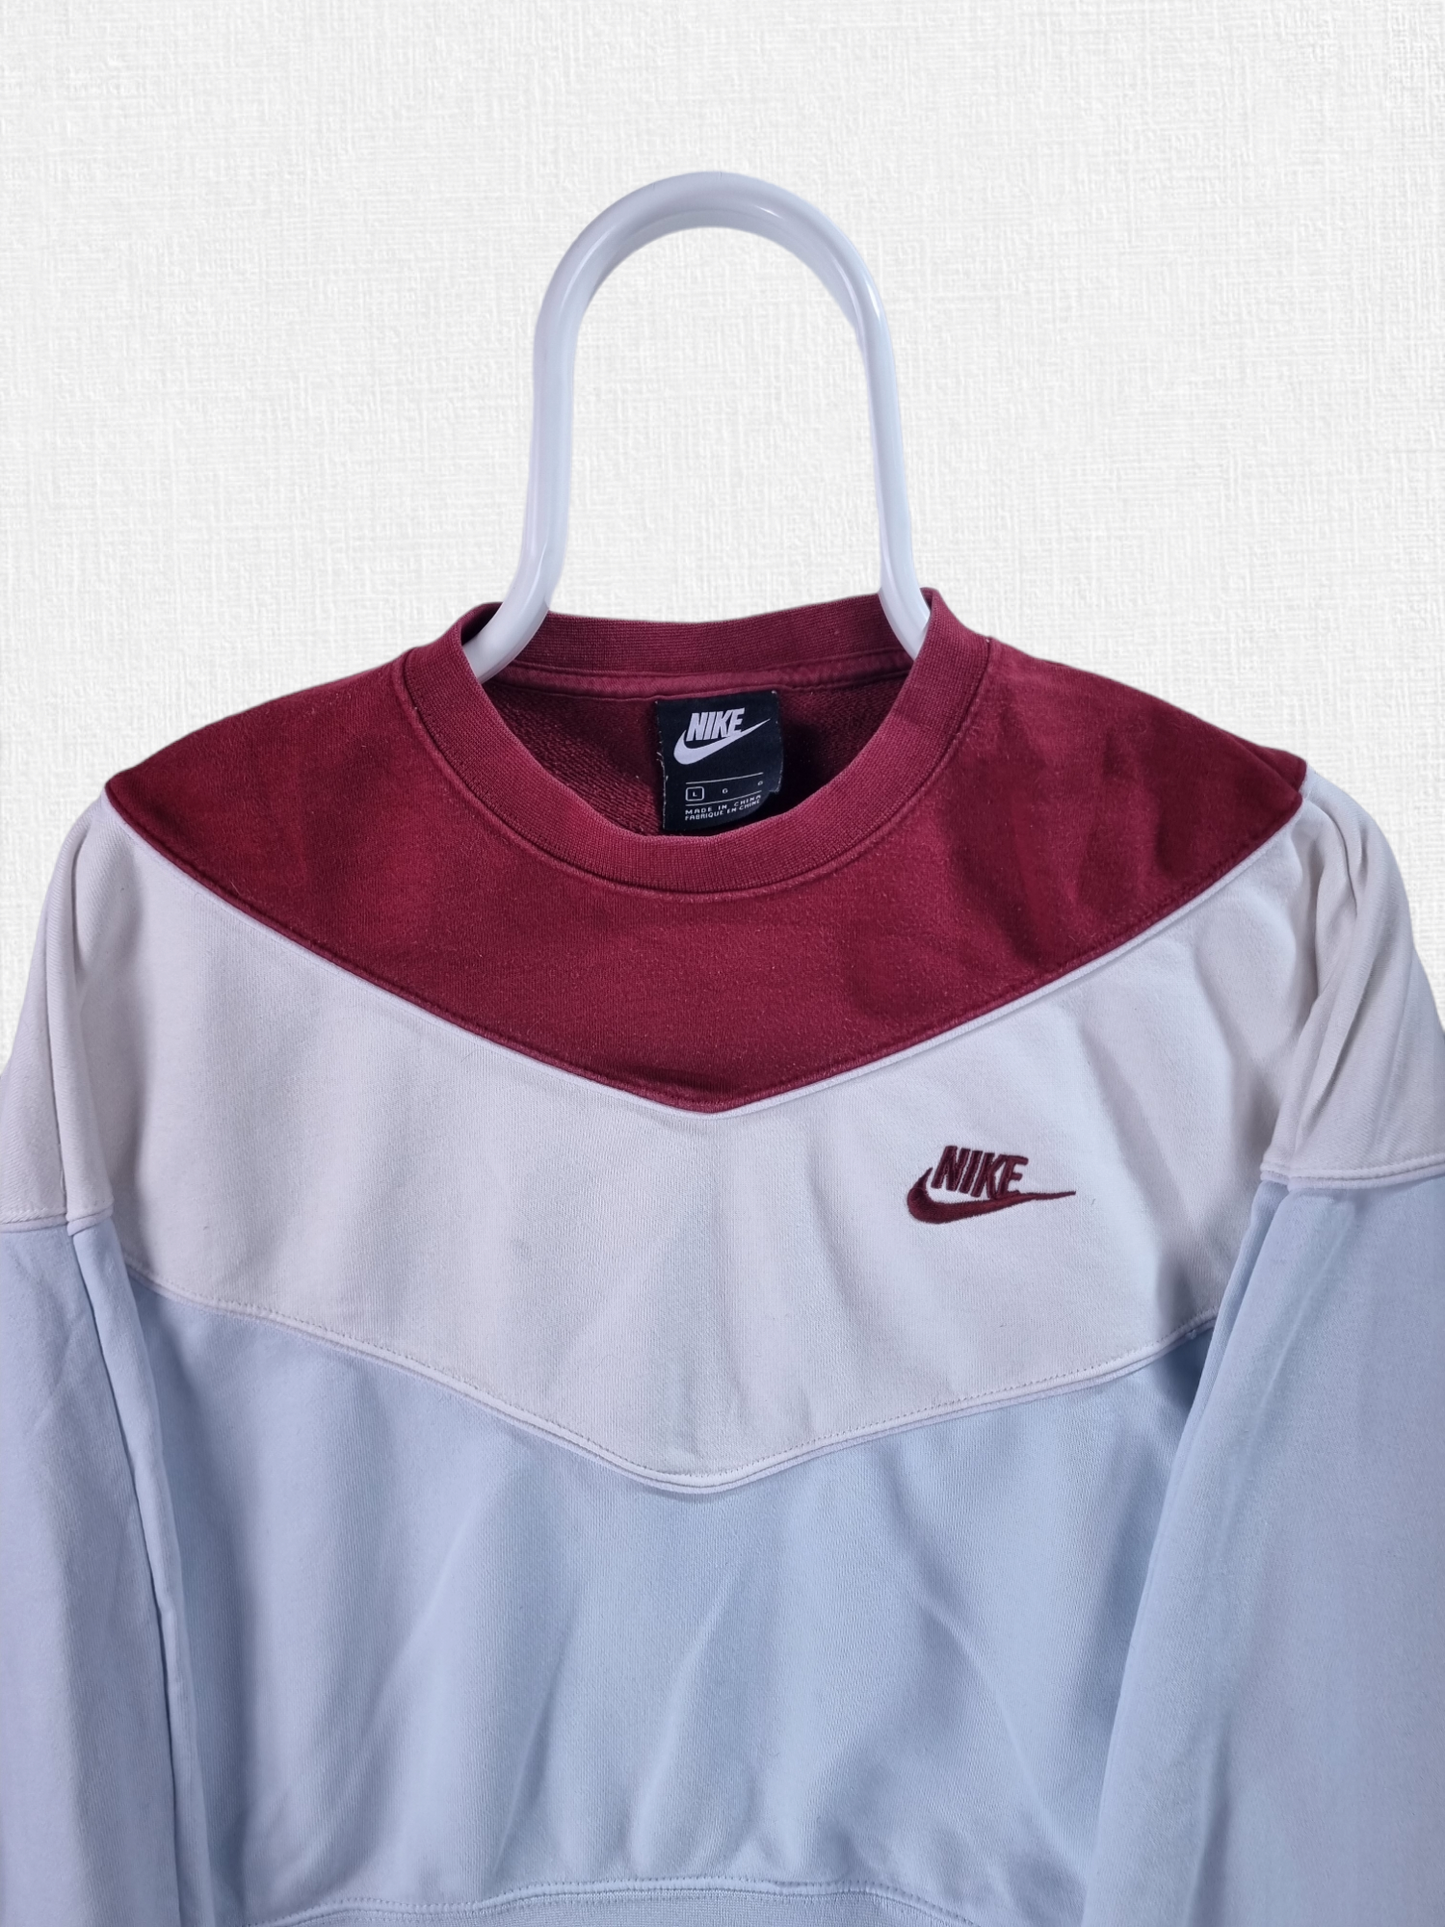 Nike crop top sweater maat L